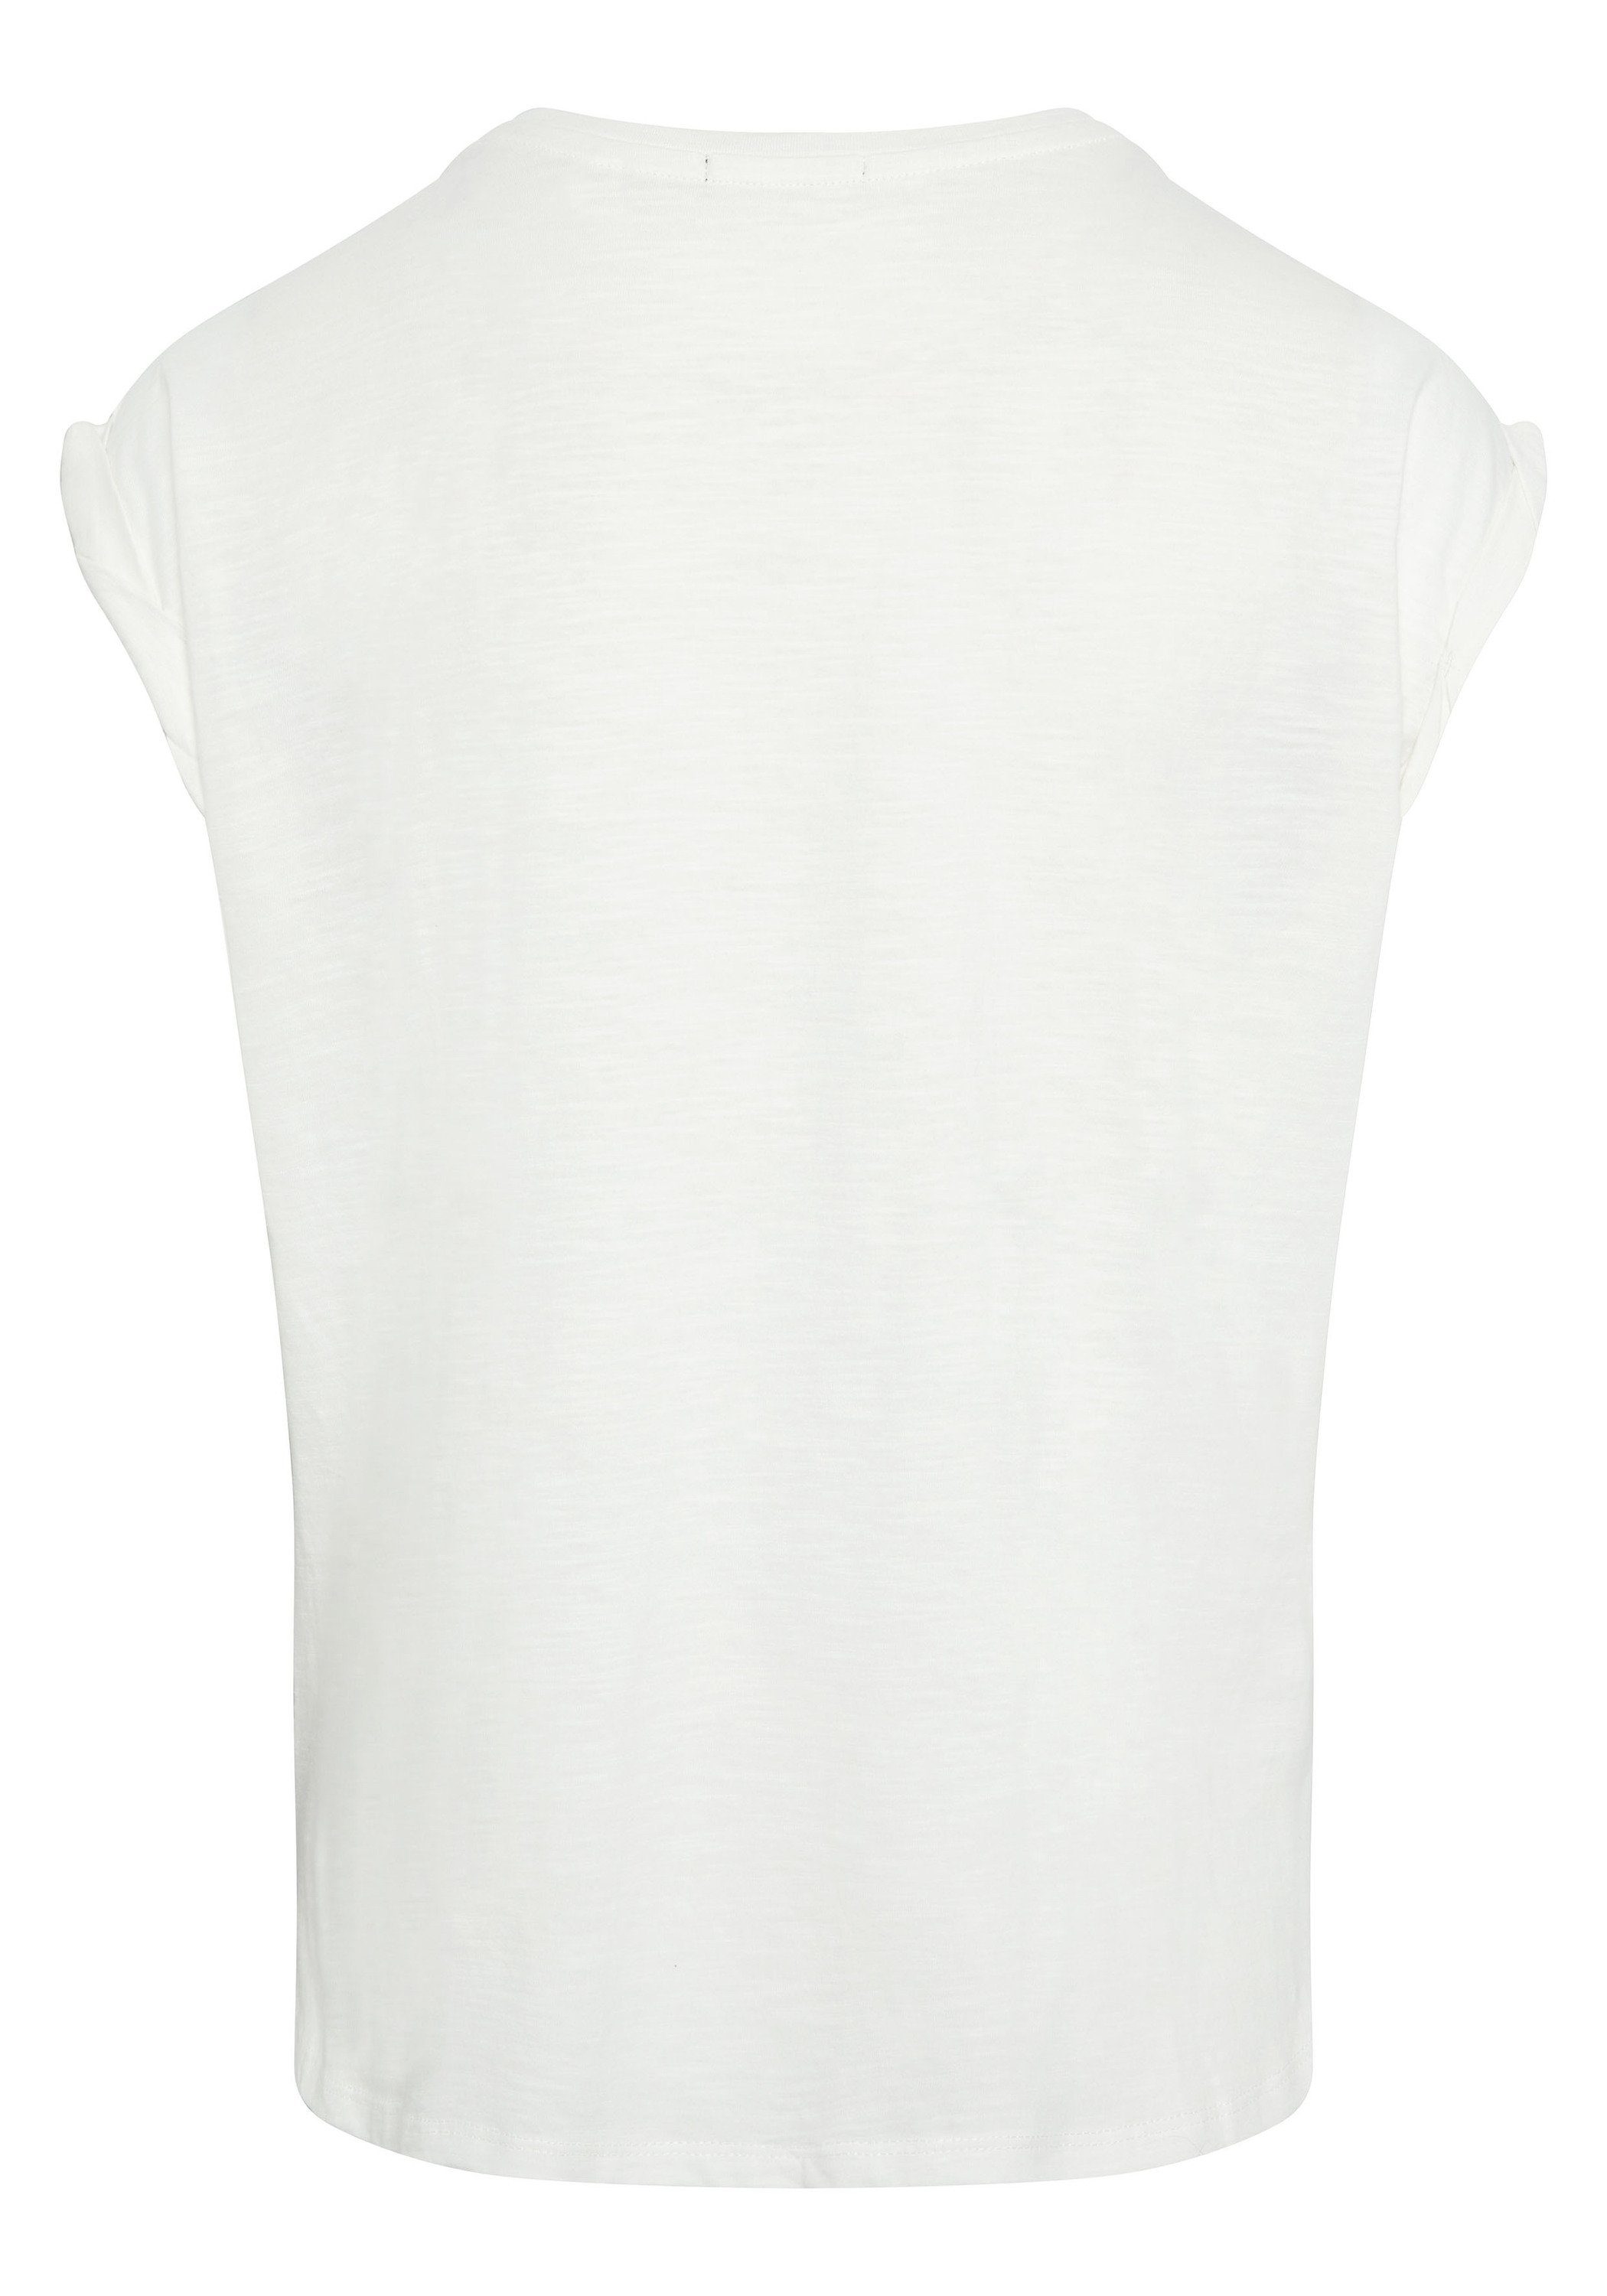 Chiemsee Print-Shirt mit Fotoprint White 1 T-Shirt 11-4202 Star